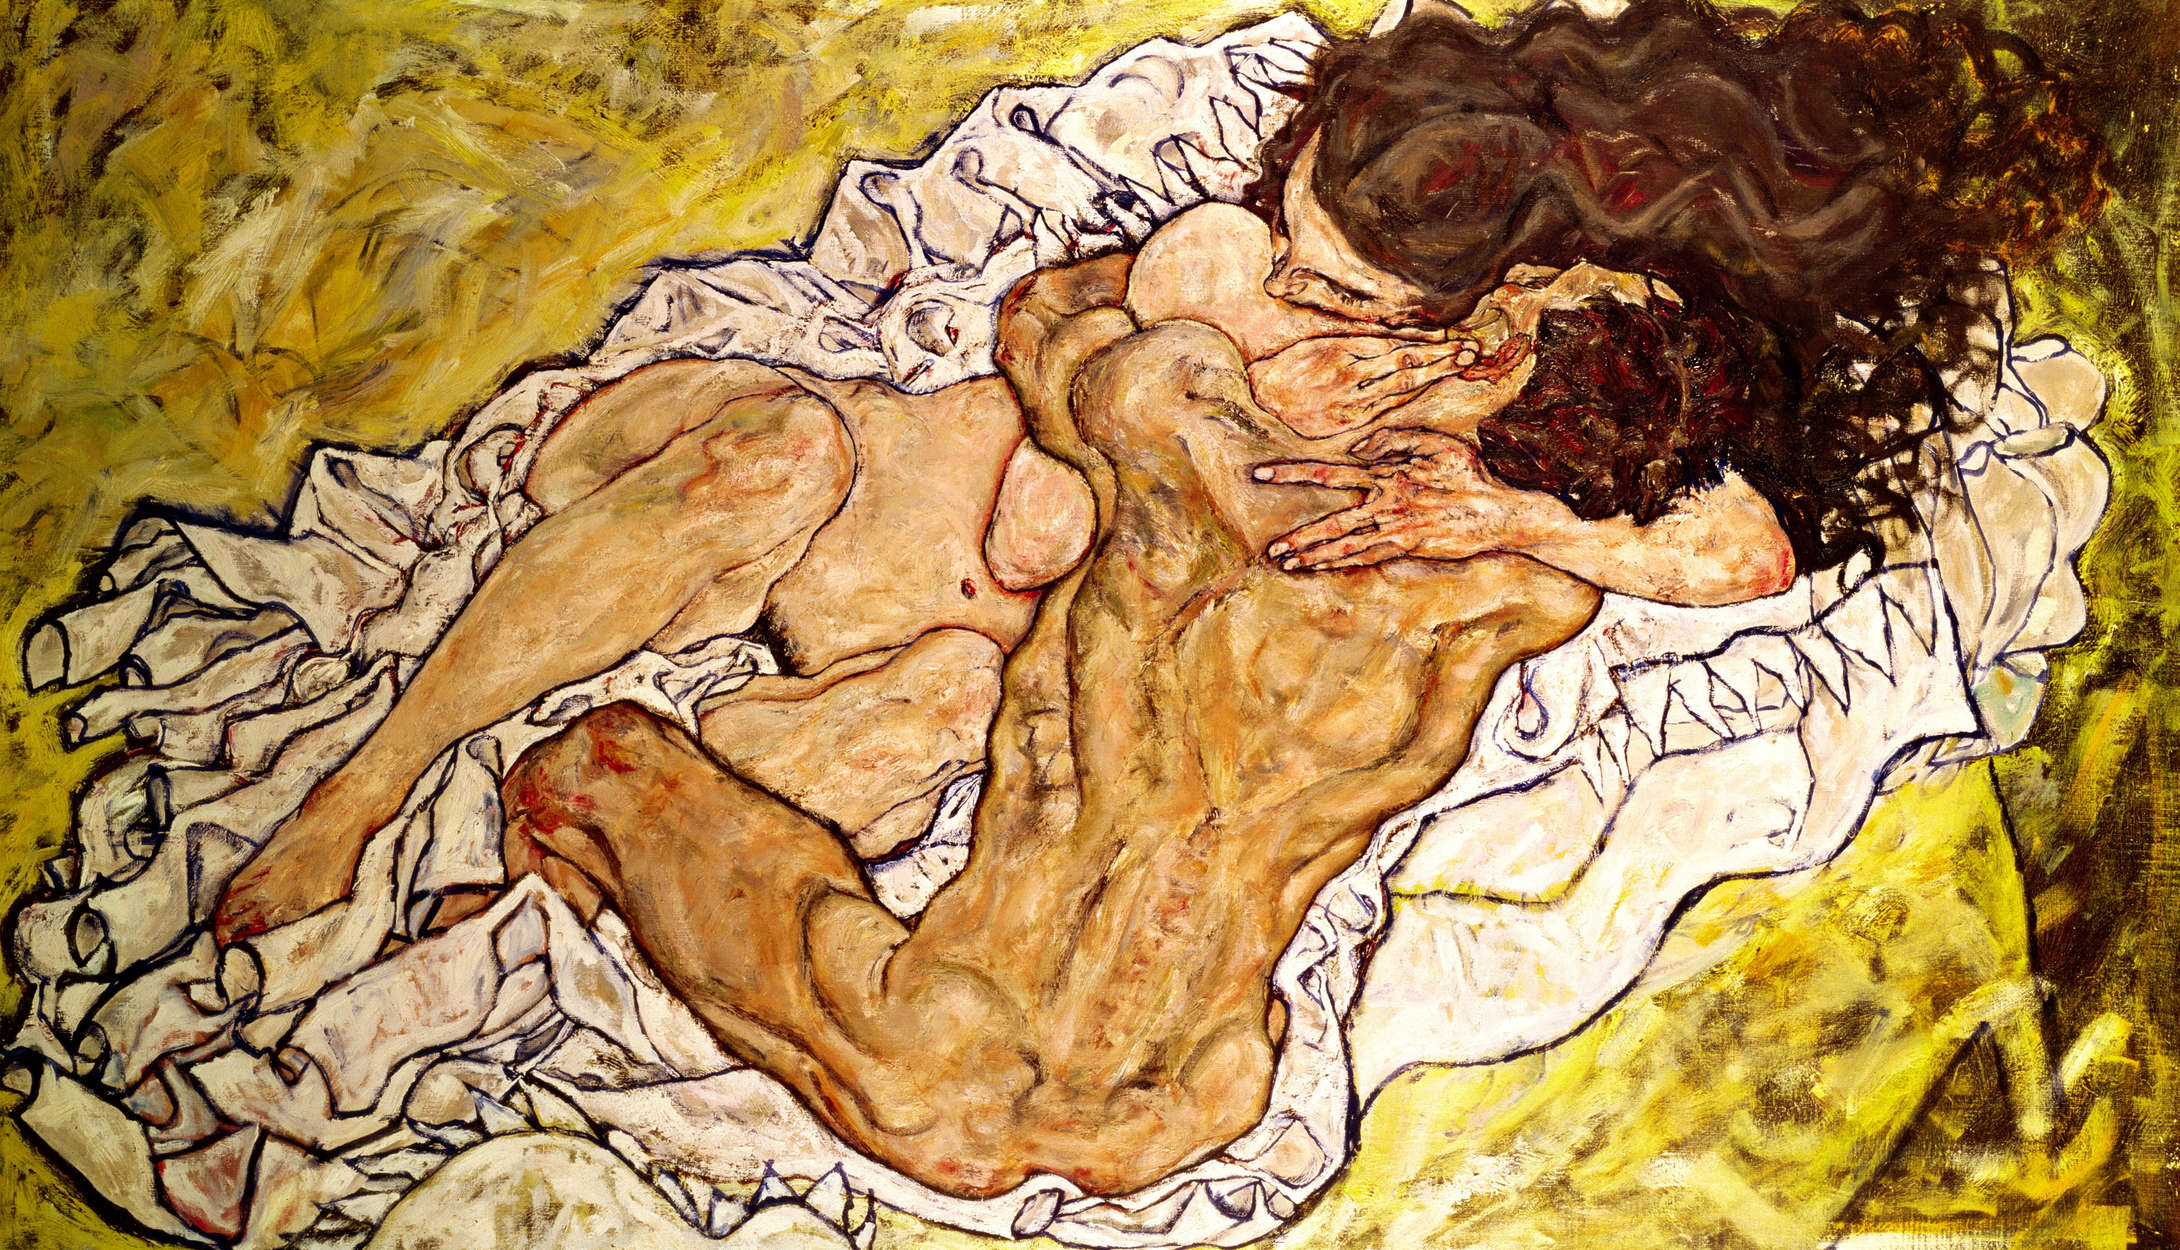             Mural "El abrazo" de Egon Schiele
        